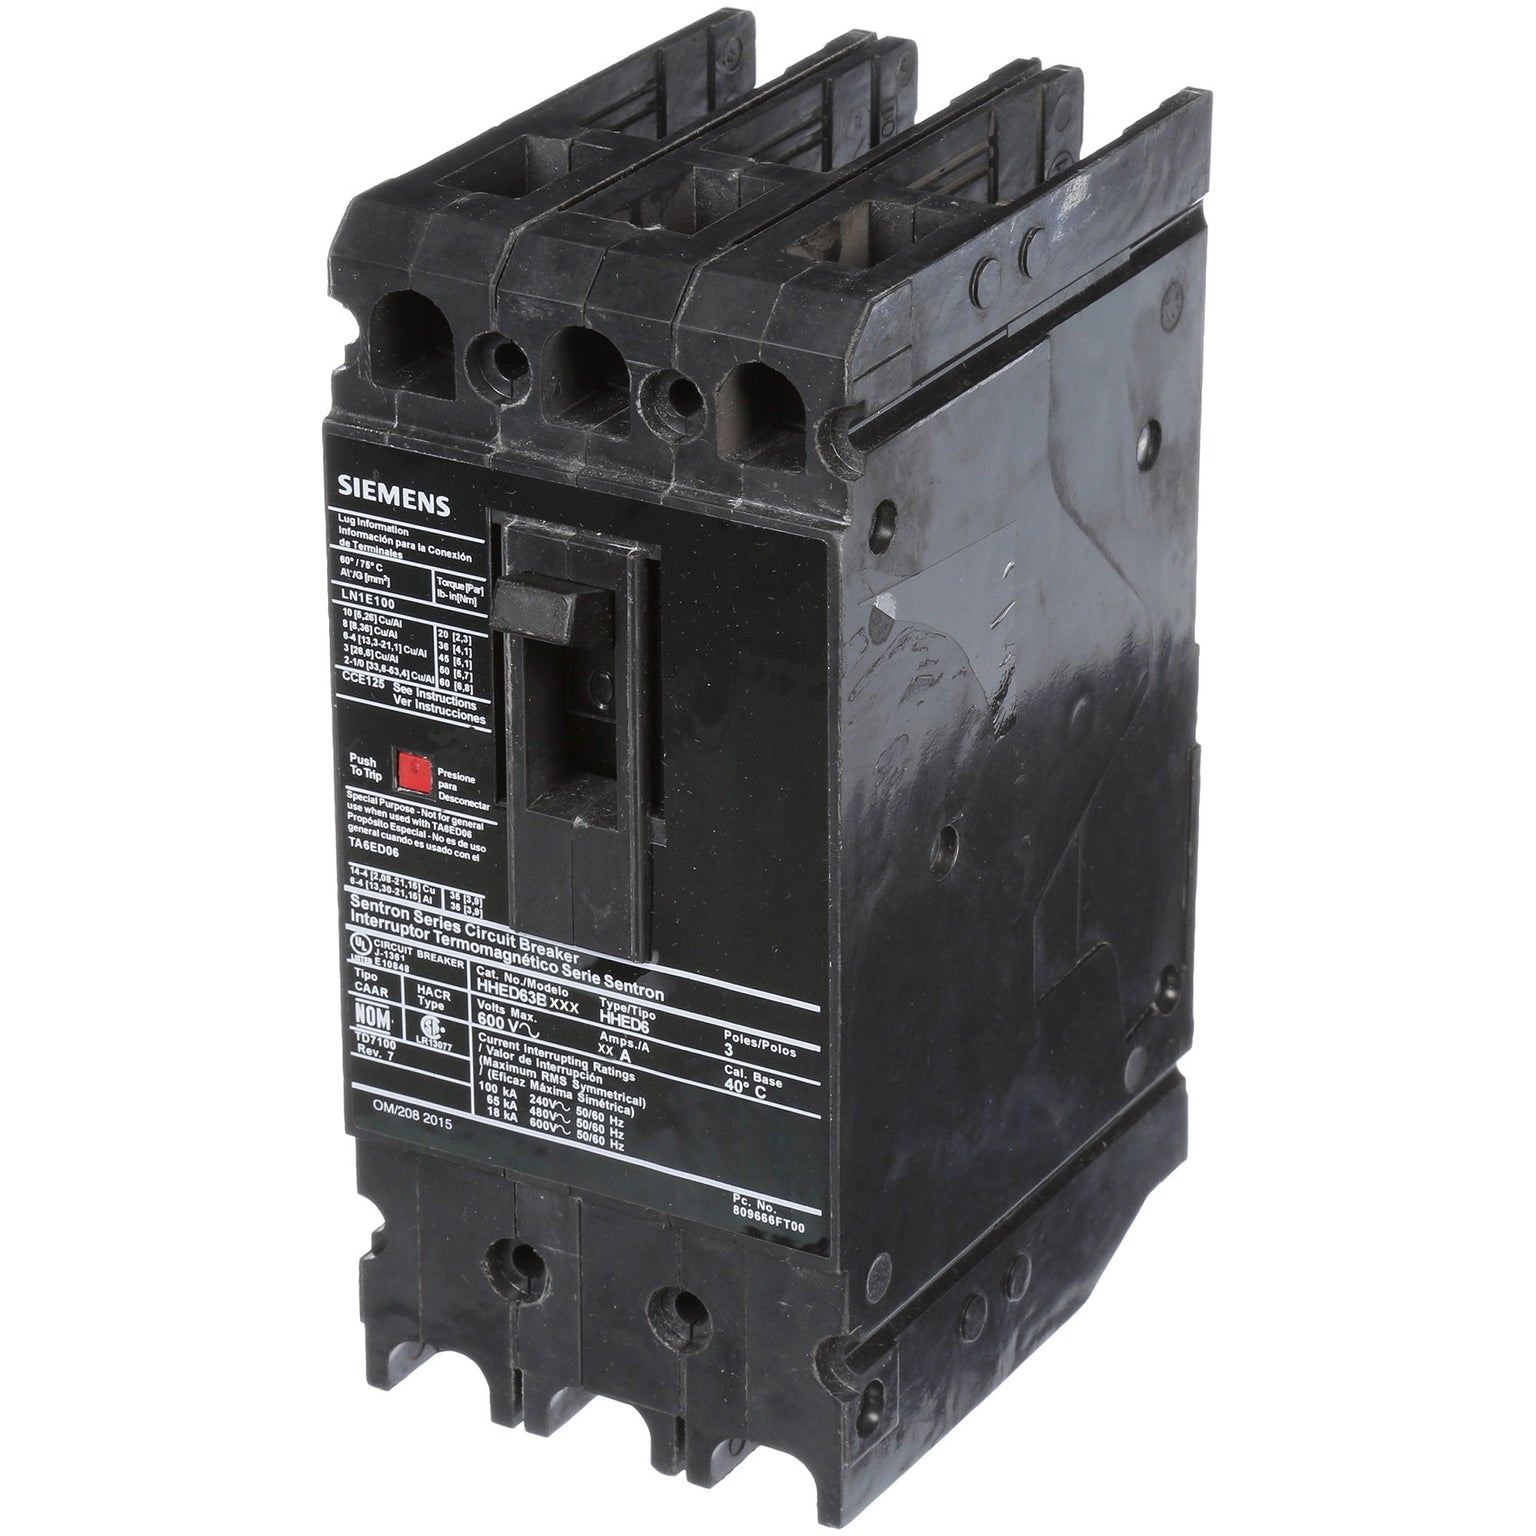 HHED63B020 - Siemens - Molded Case Circuit Breaker